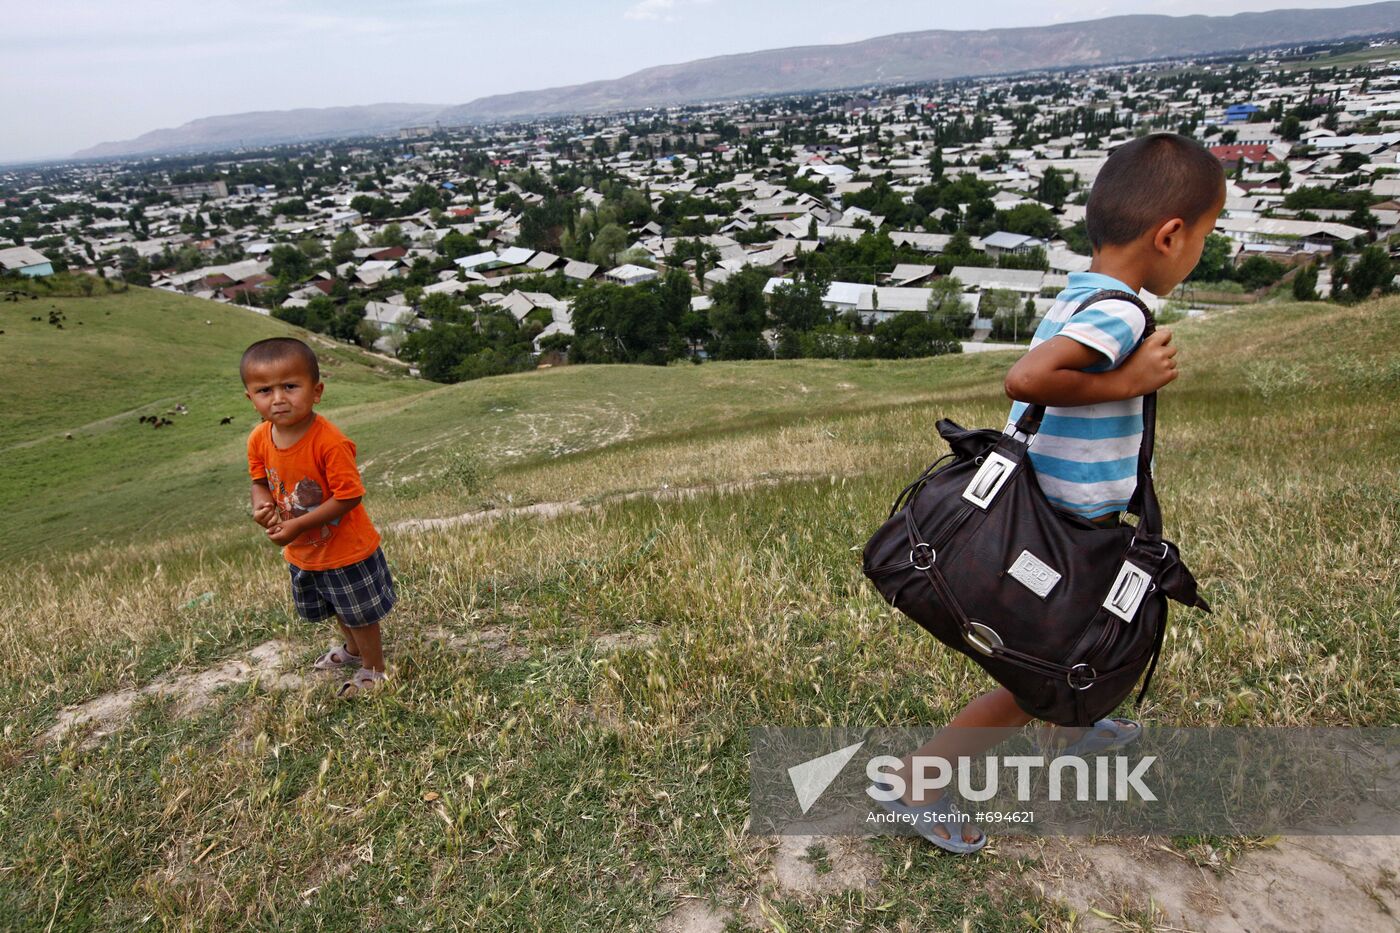 Uzbek refugees